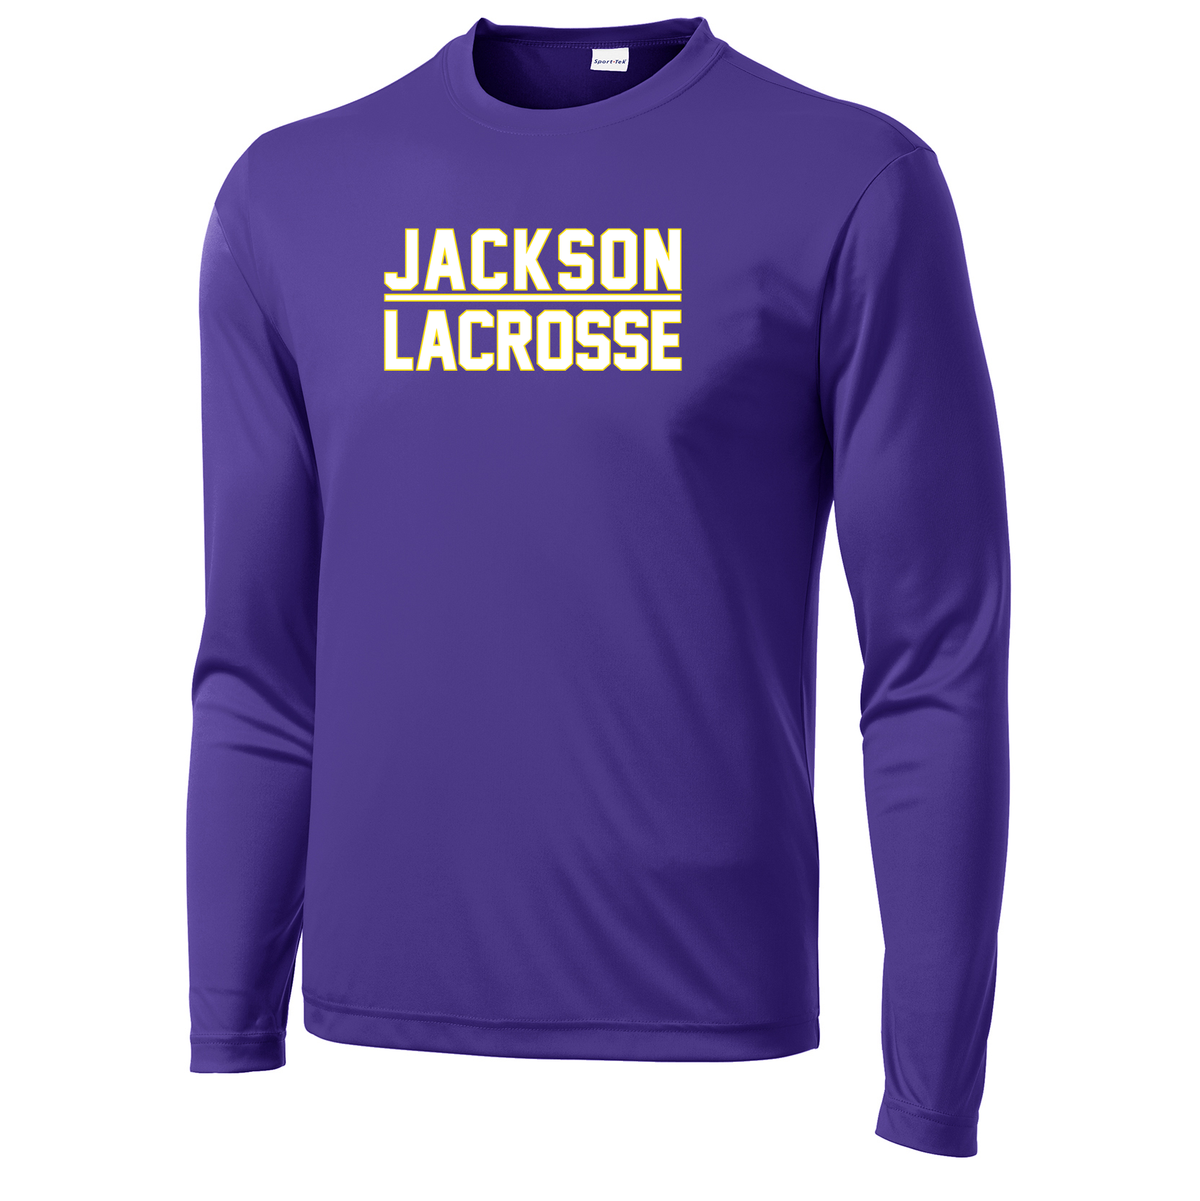 Jackson Lacrosse Long Sleeve Performance Shirt